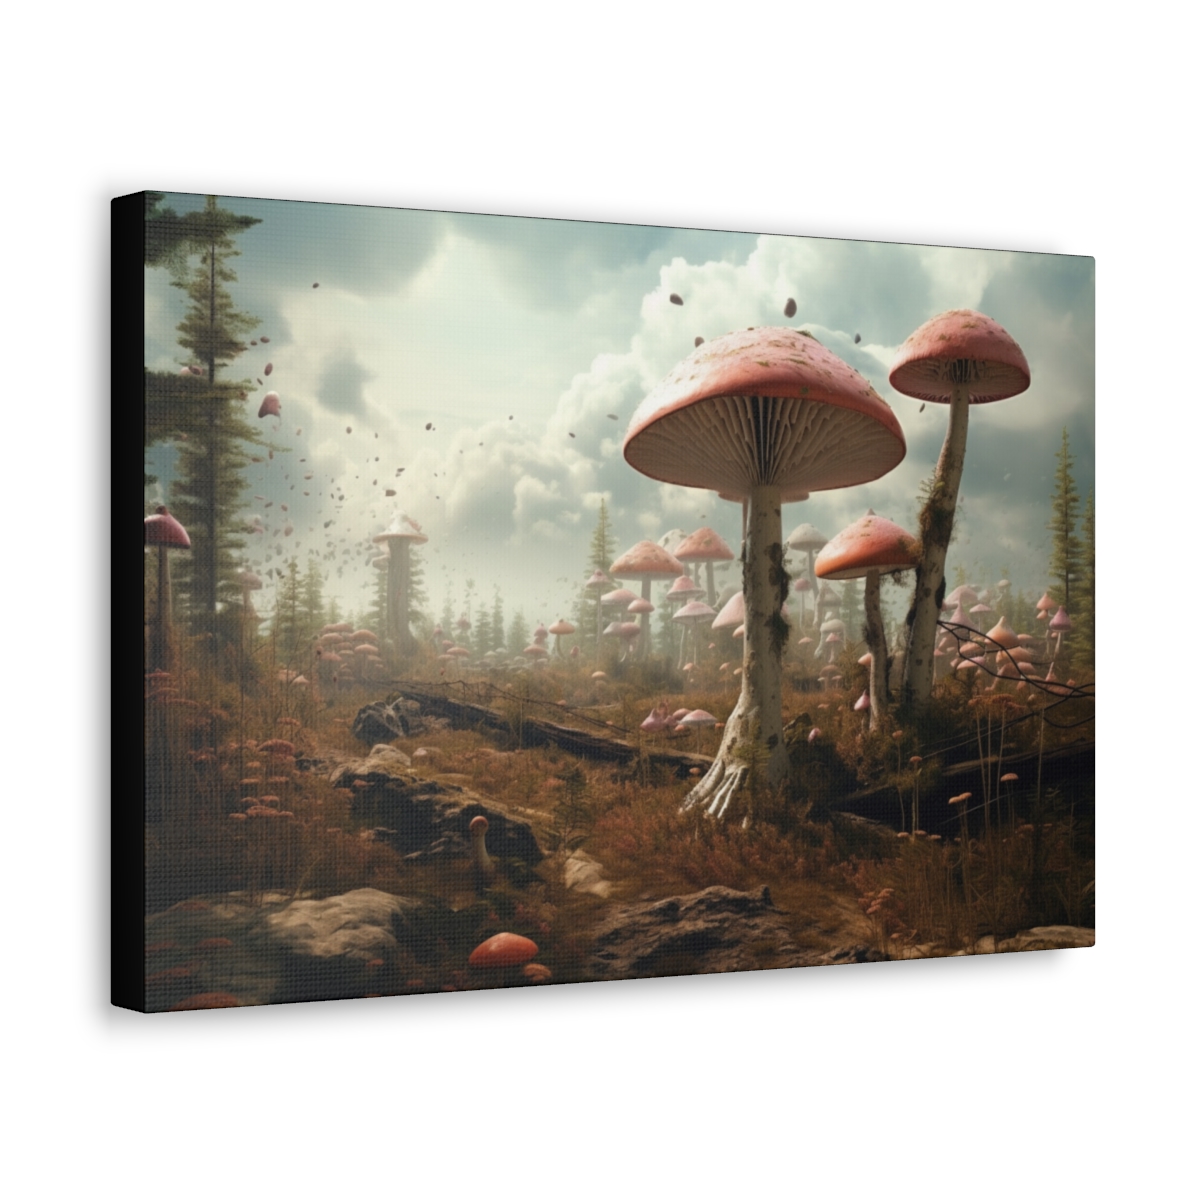 Cosmic Trippy Art: On This Road The Mushroom Reigns